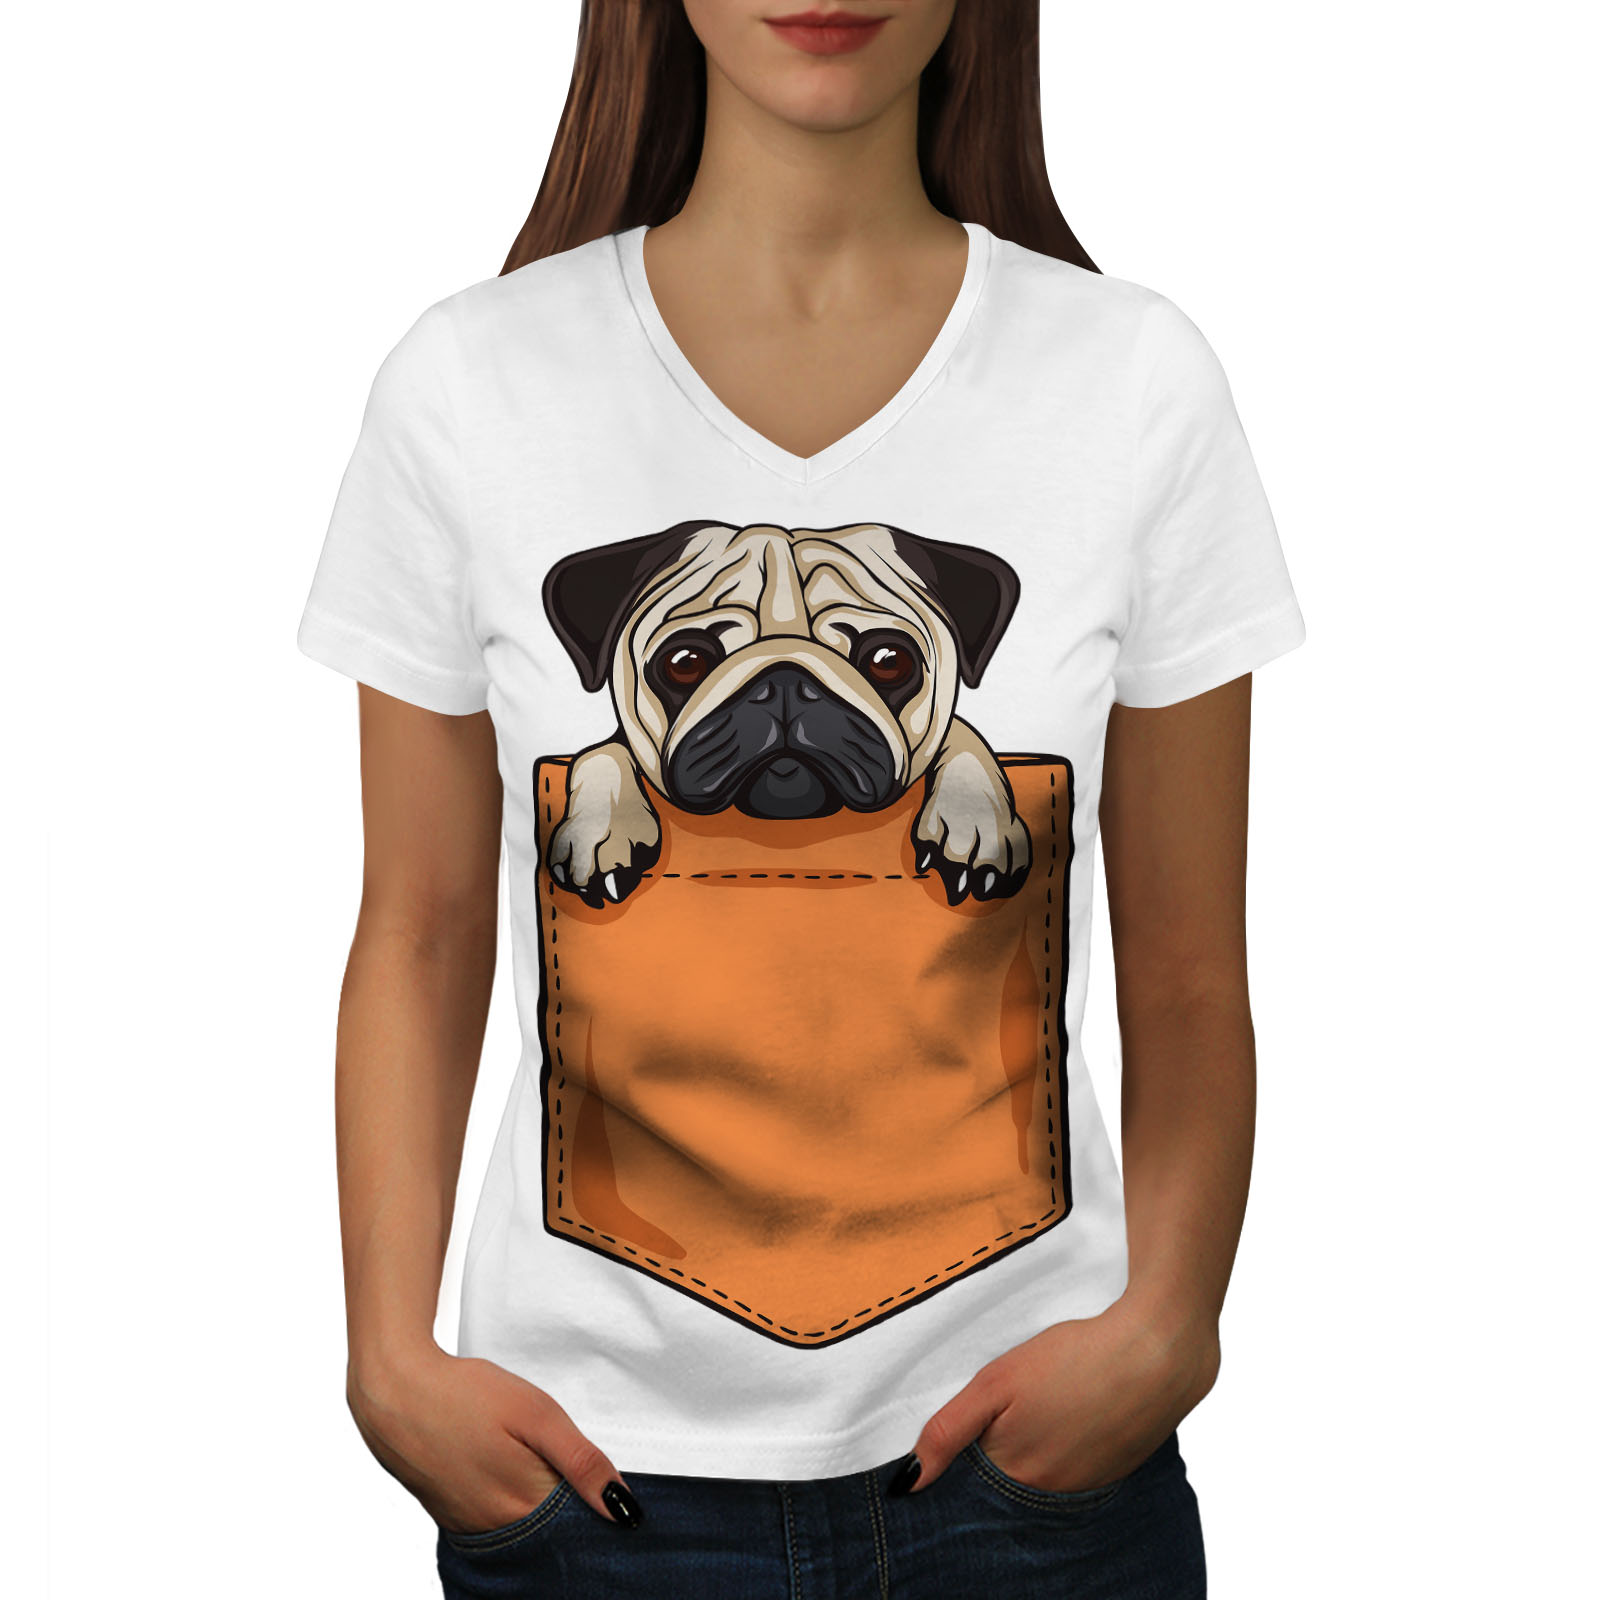 Wellcoda Pug Puppy in Pocket Womens V-Neck T-Shirt Cute Printed Design Tee 